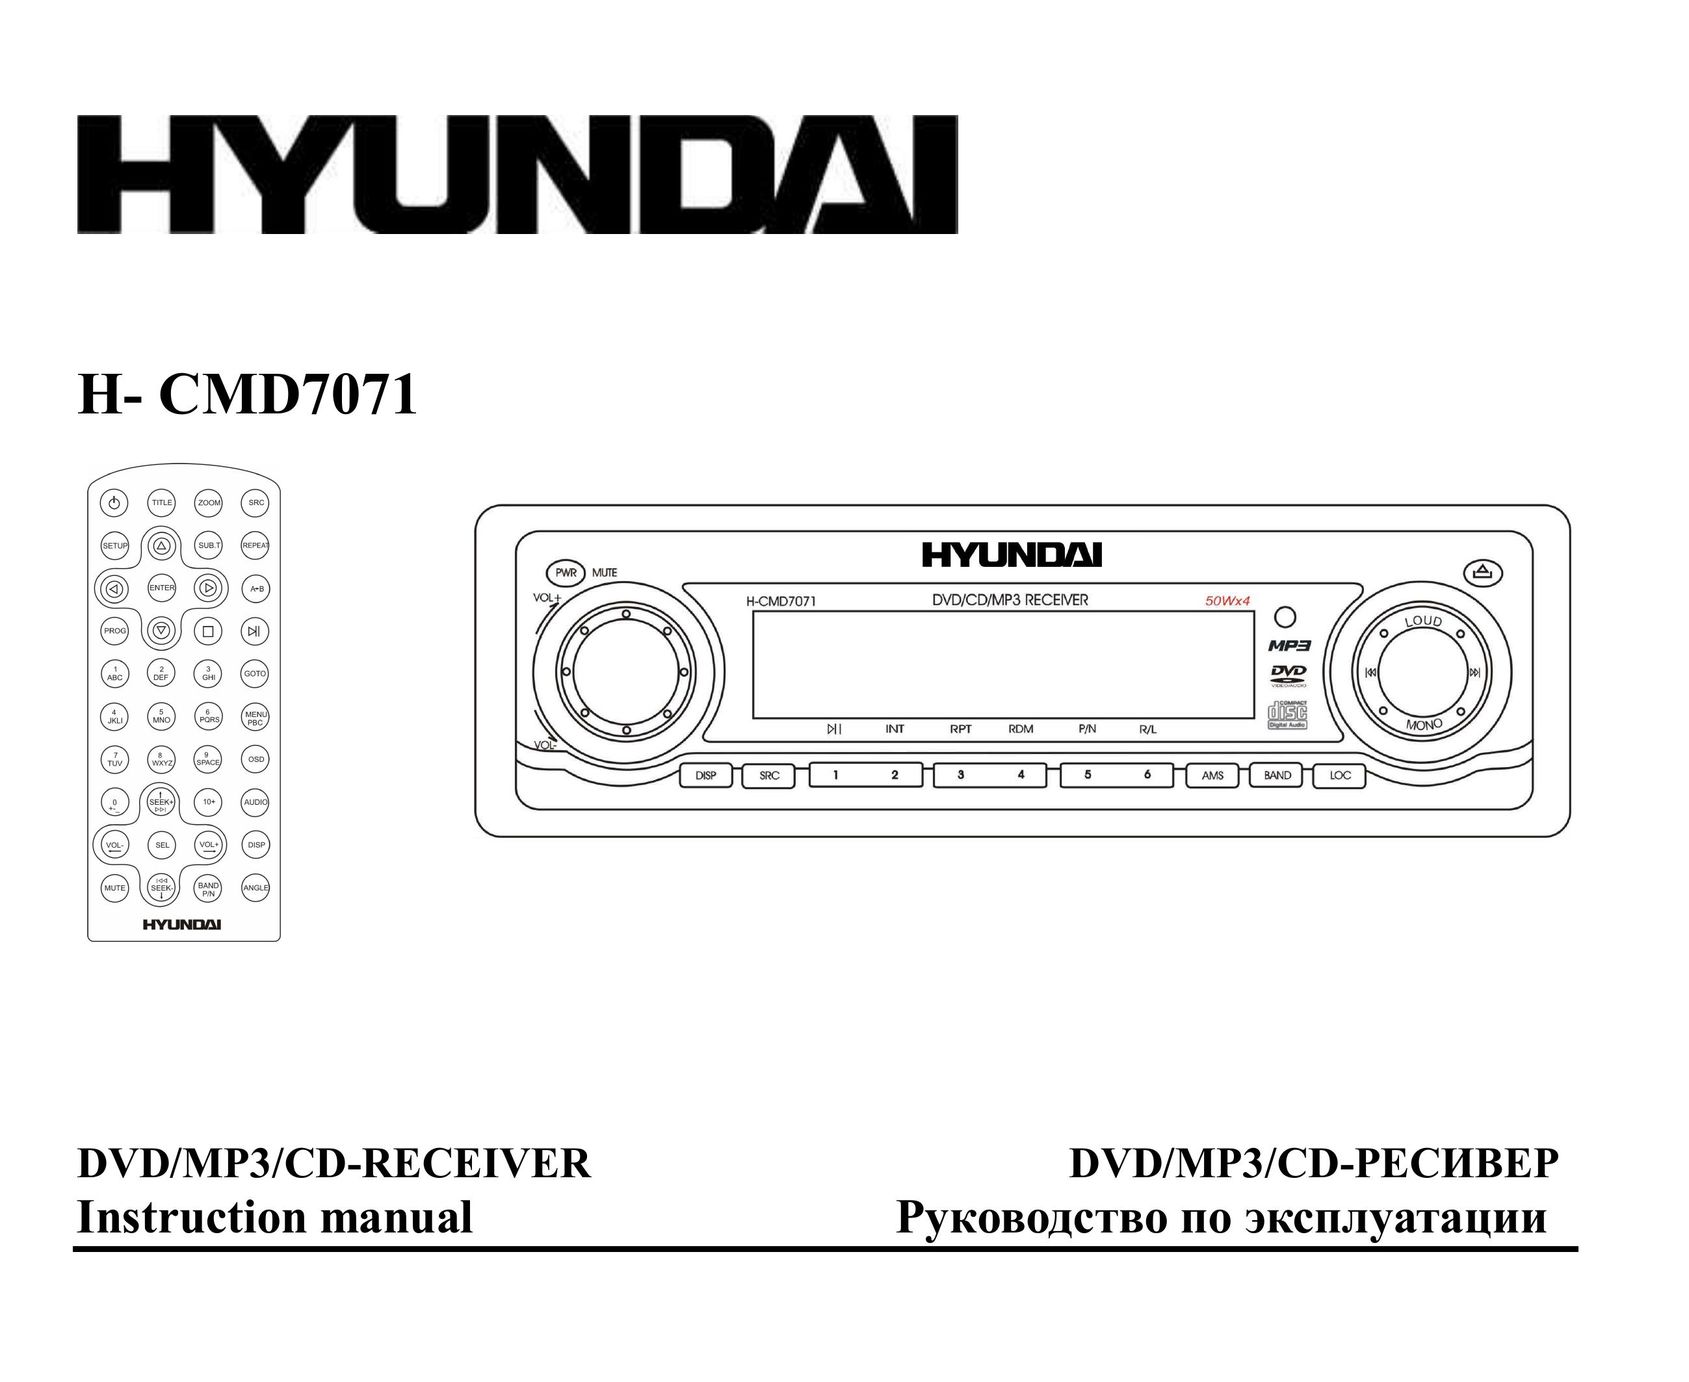 Hyundai h-cmd7071 Car Satellite TV System User Manual